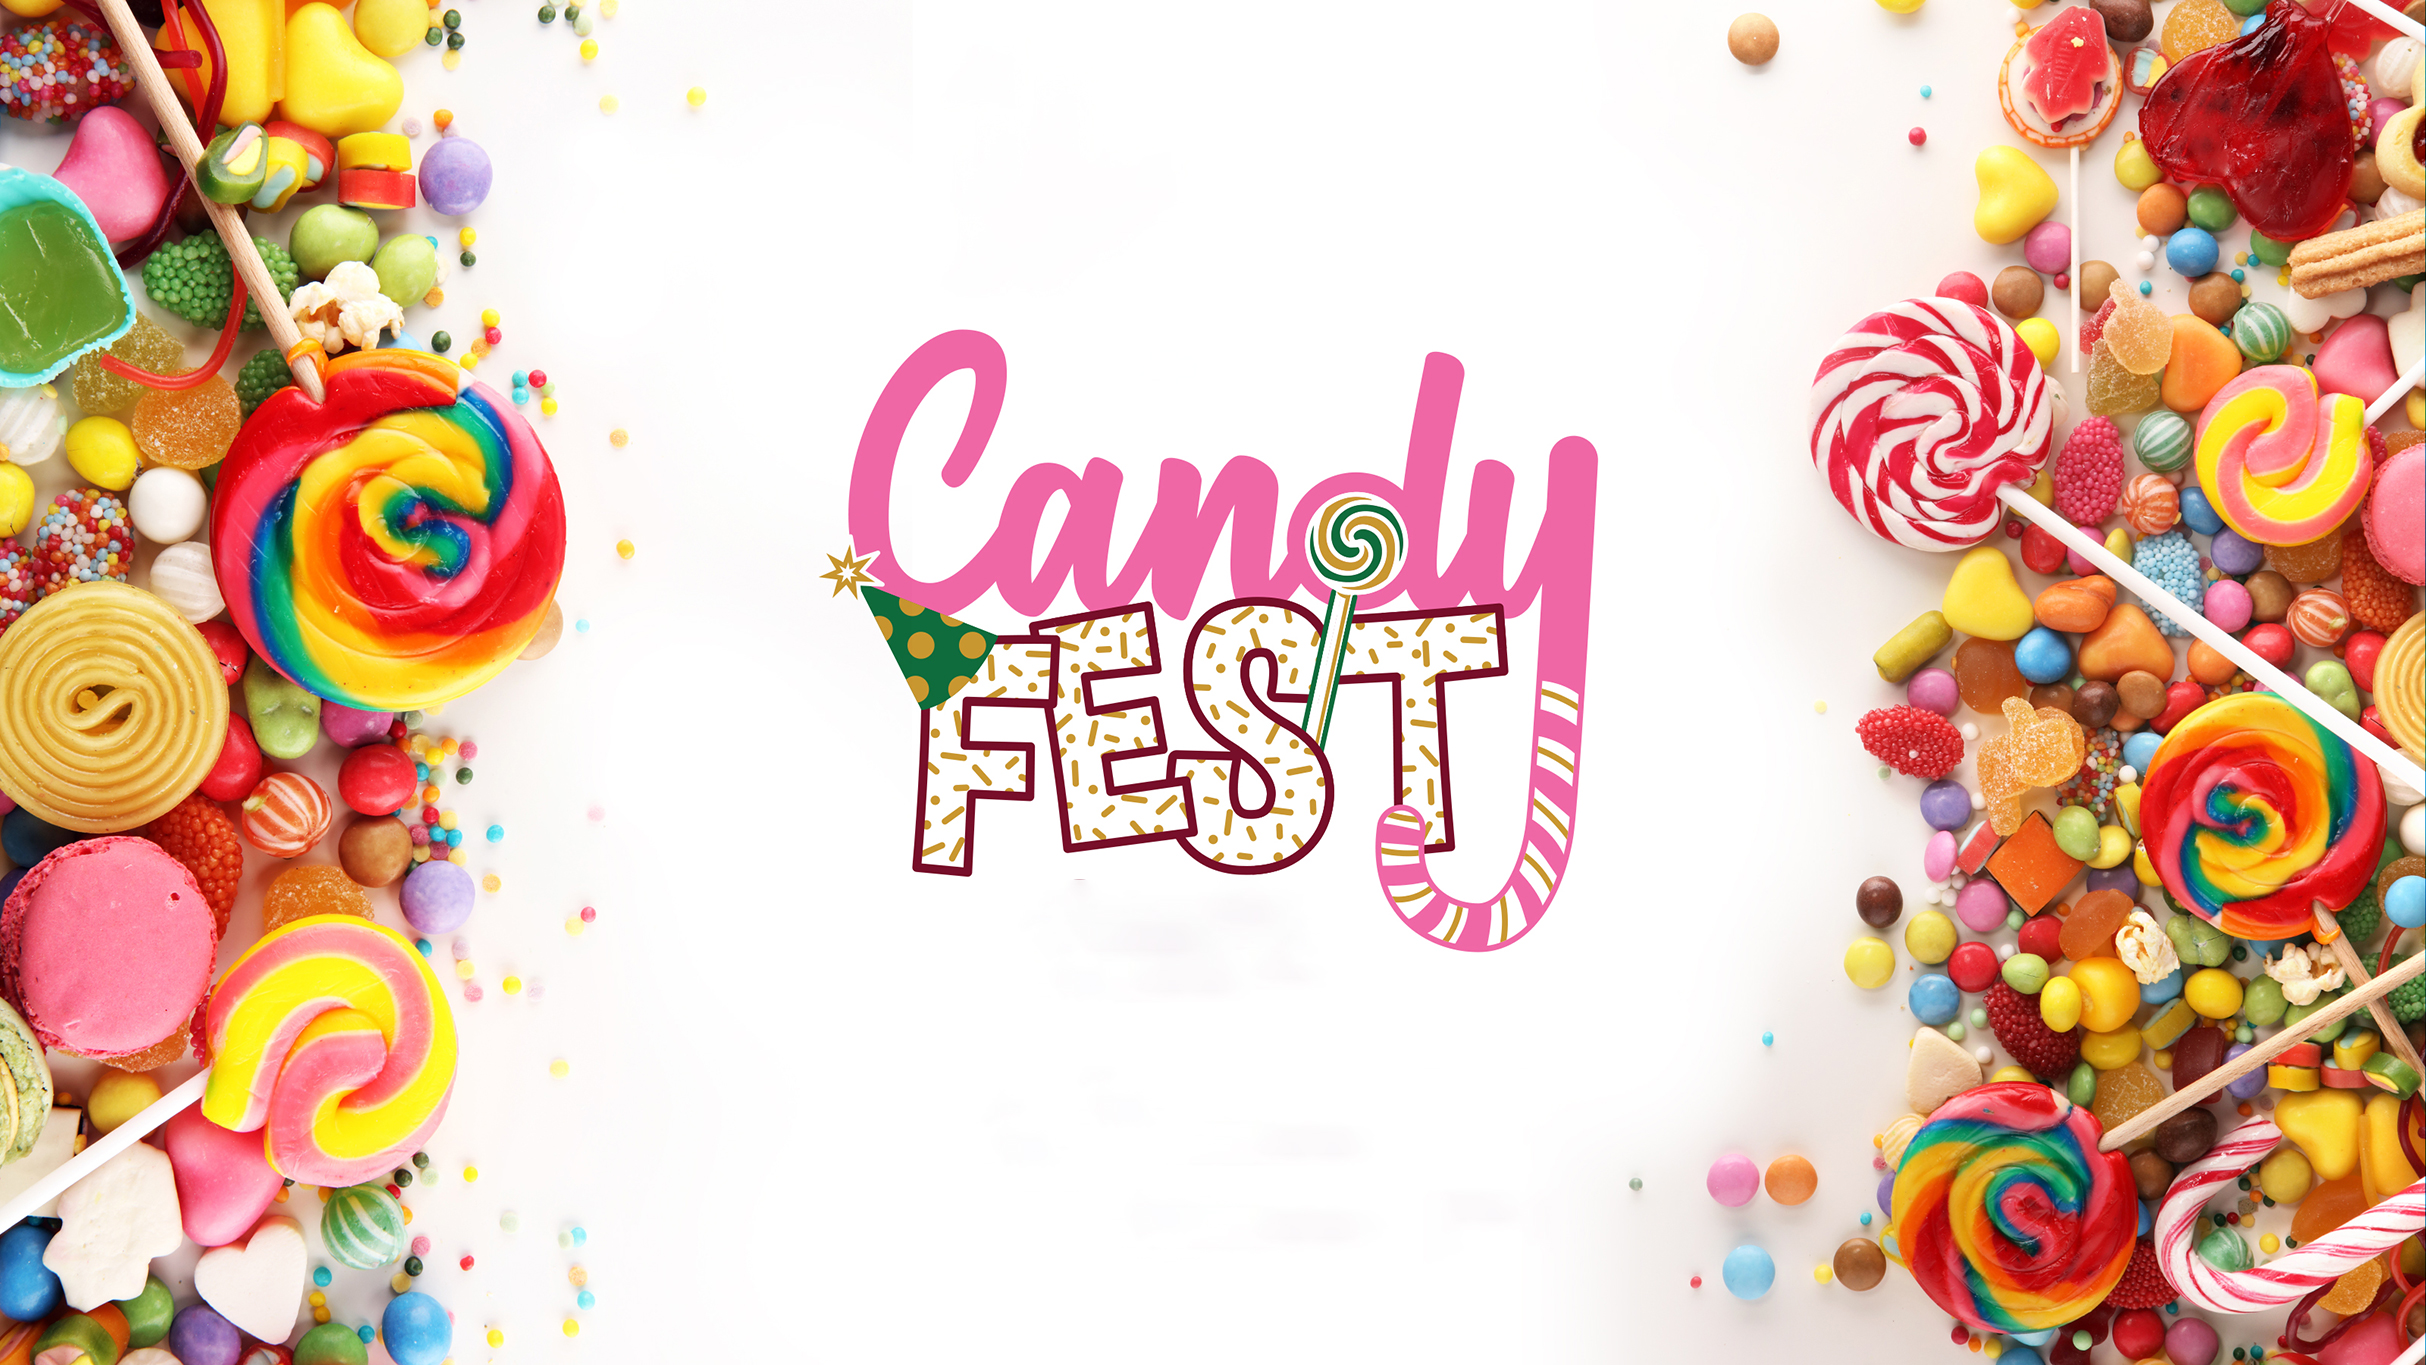 CandyFest - Friday, July 26